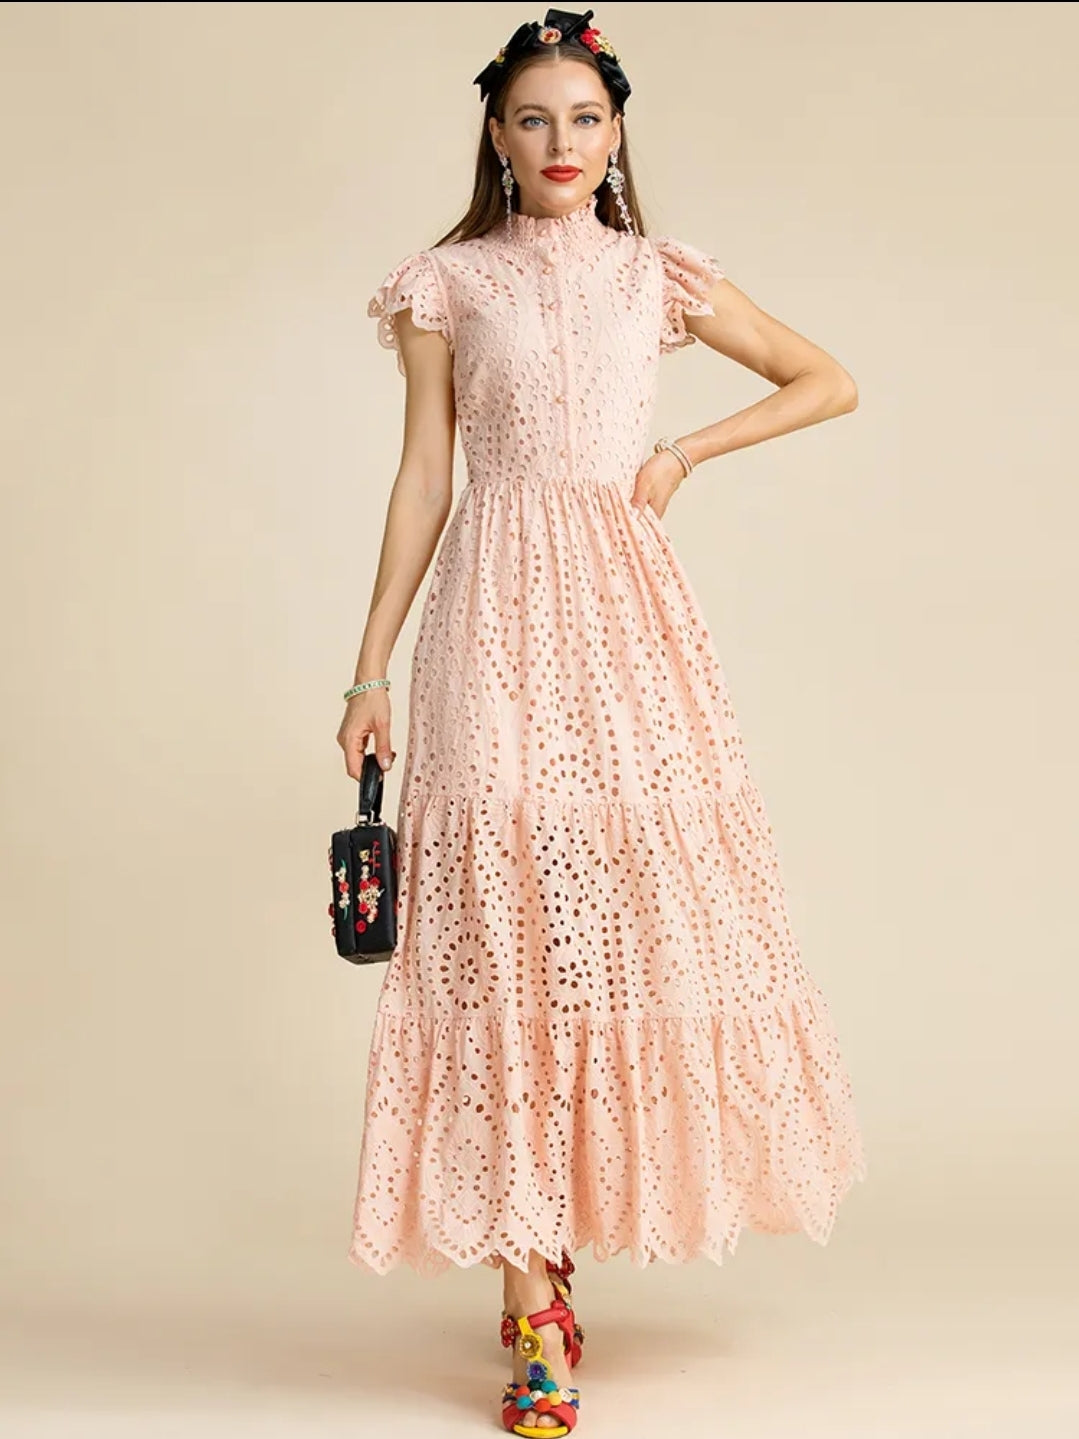 Linda Pink Dress